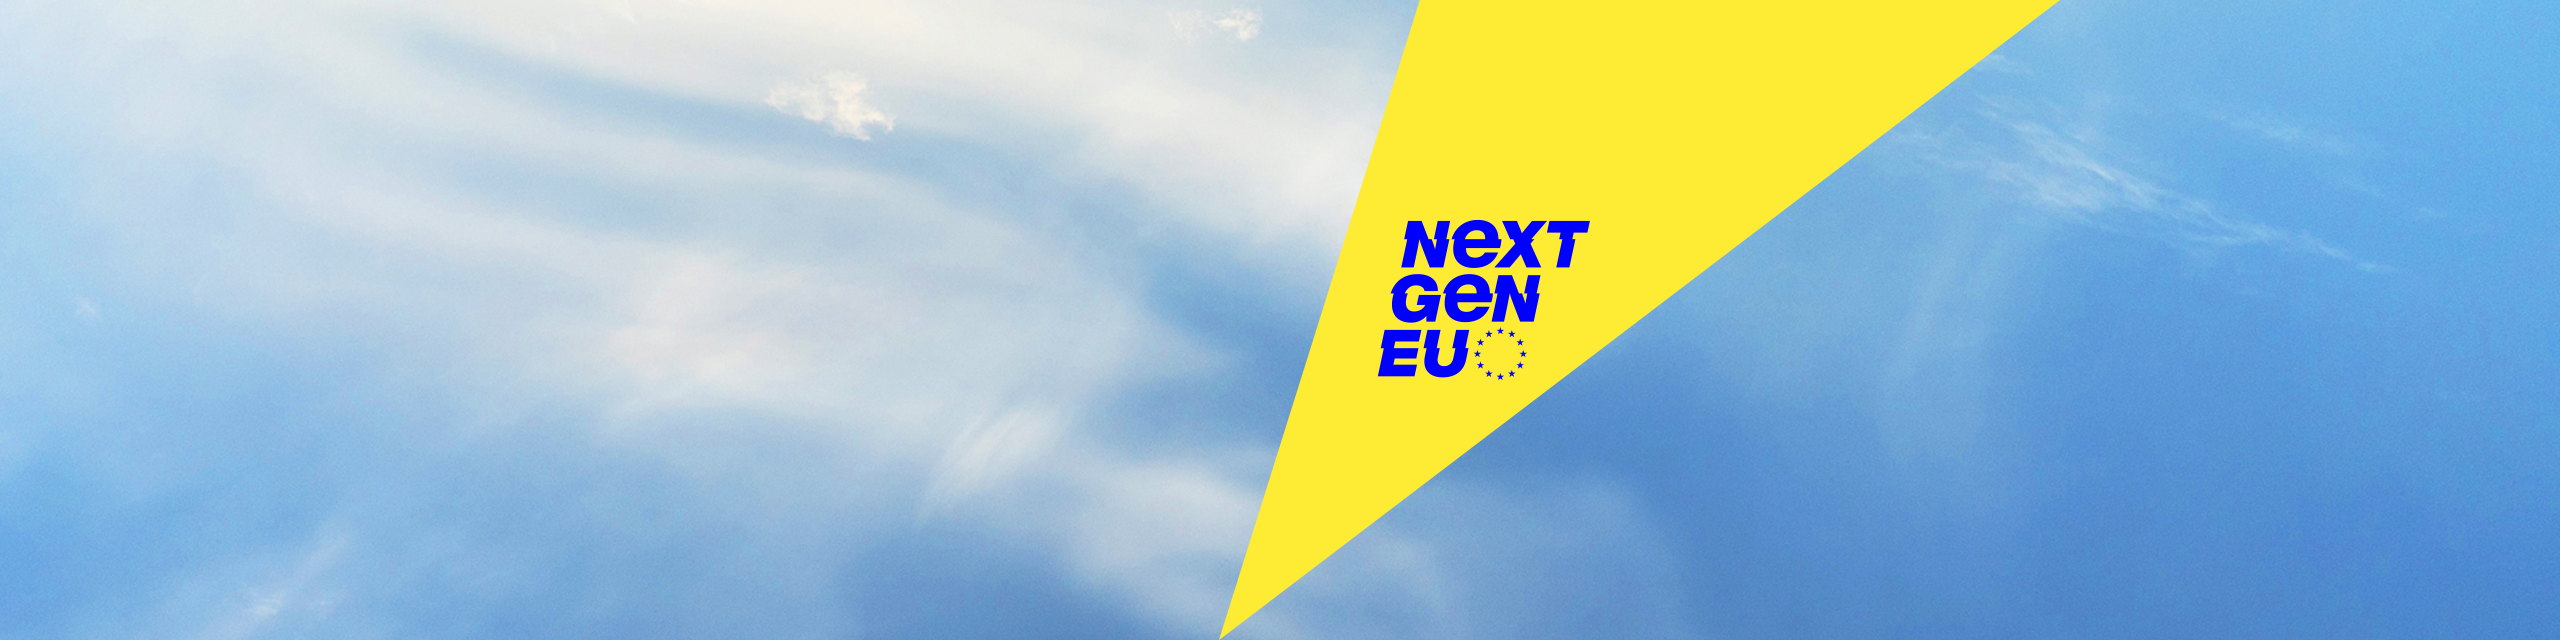 NextGenerationEU banner